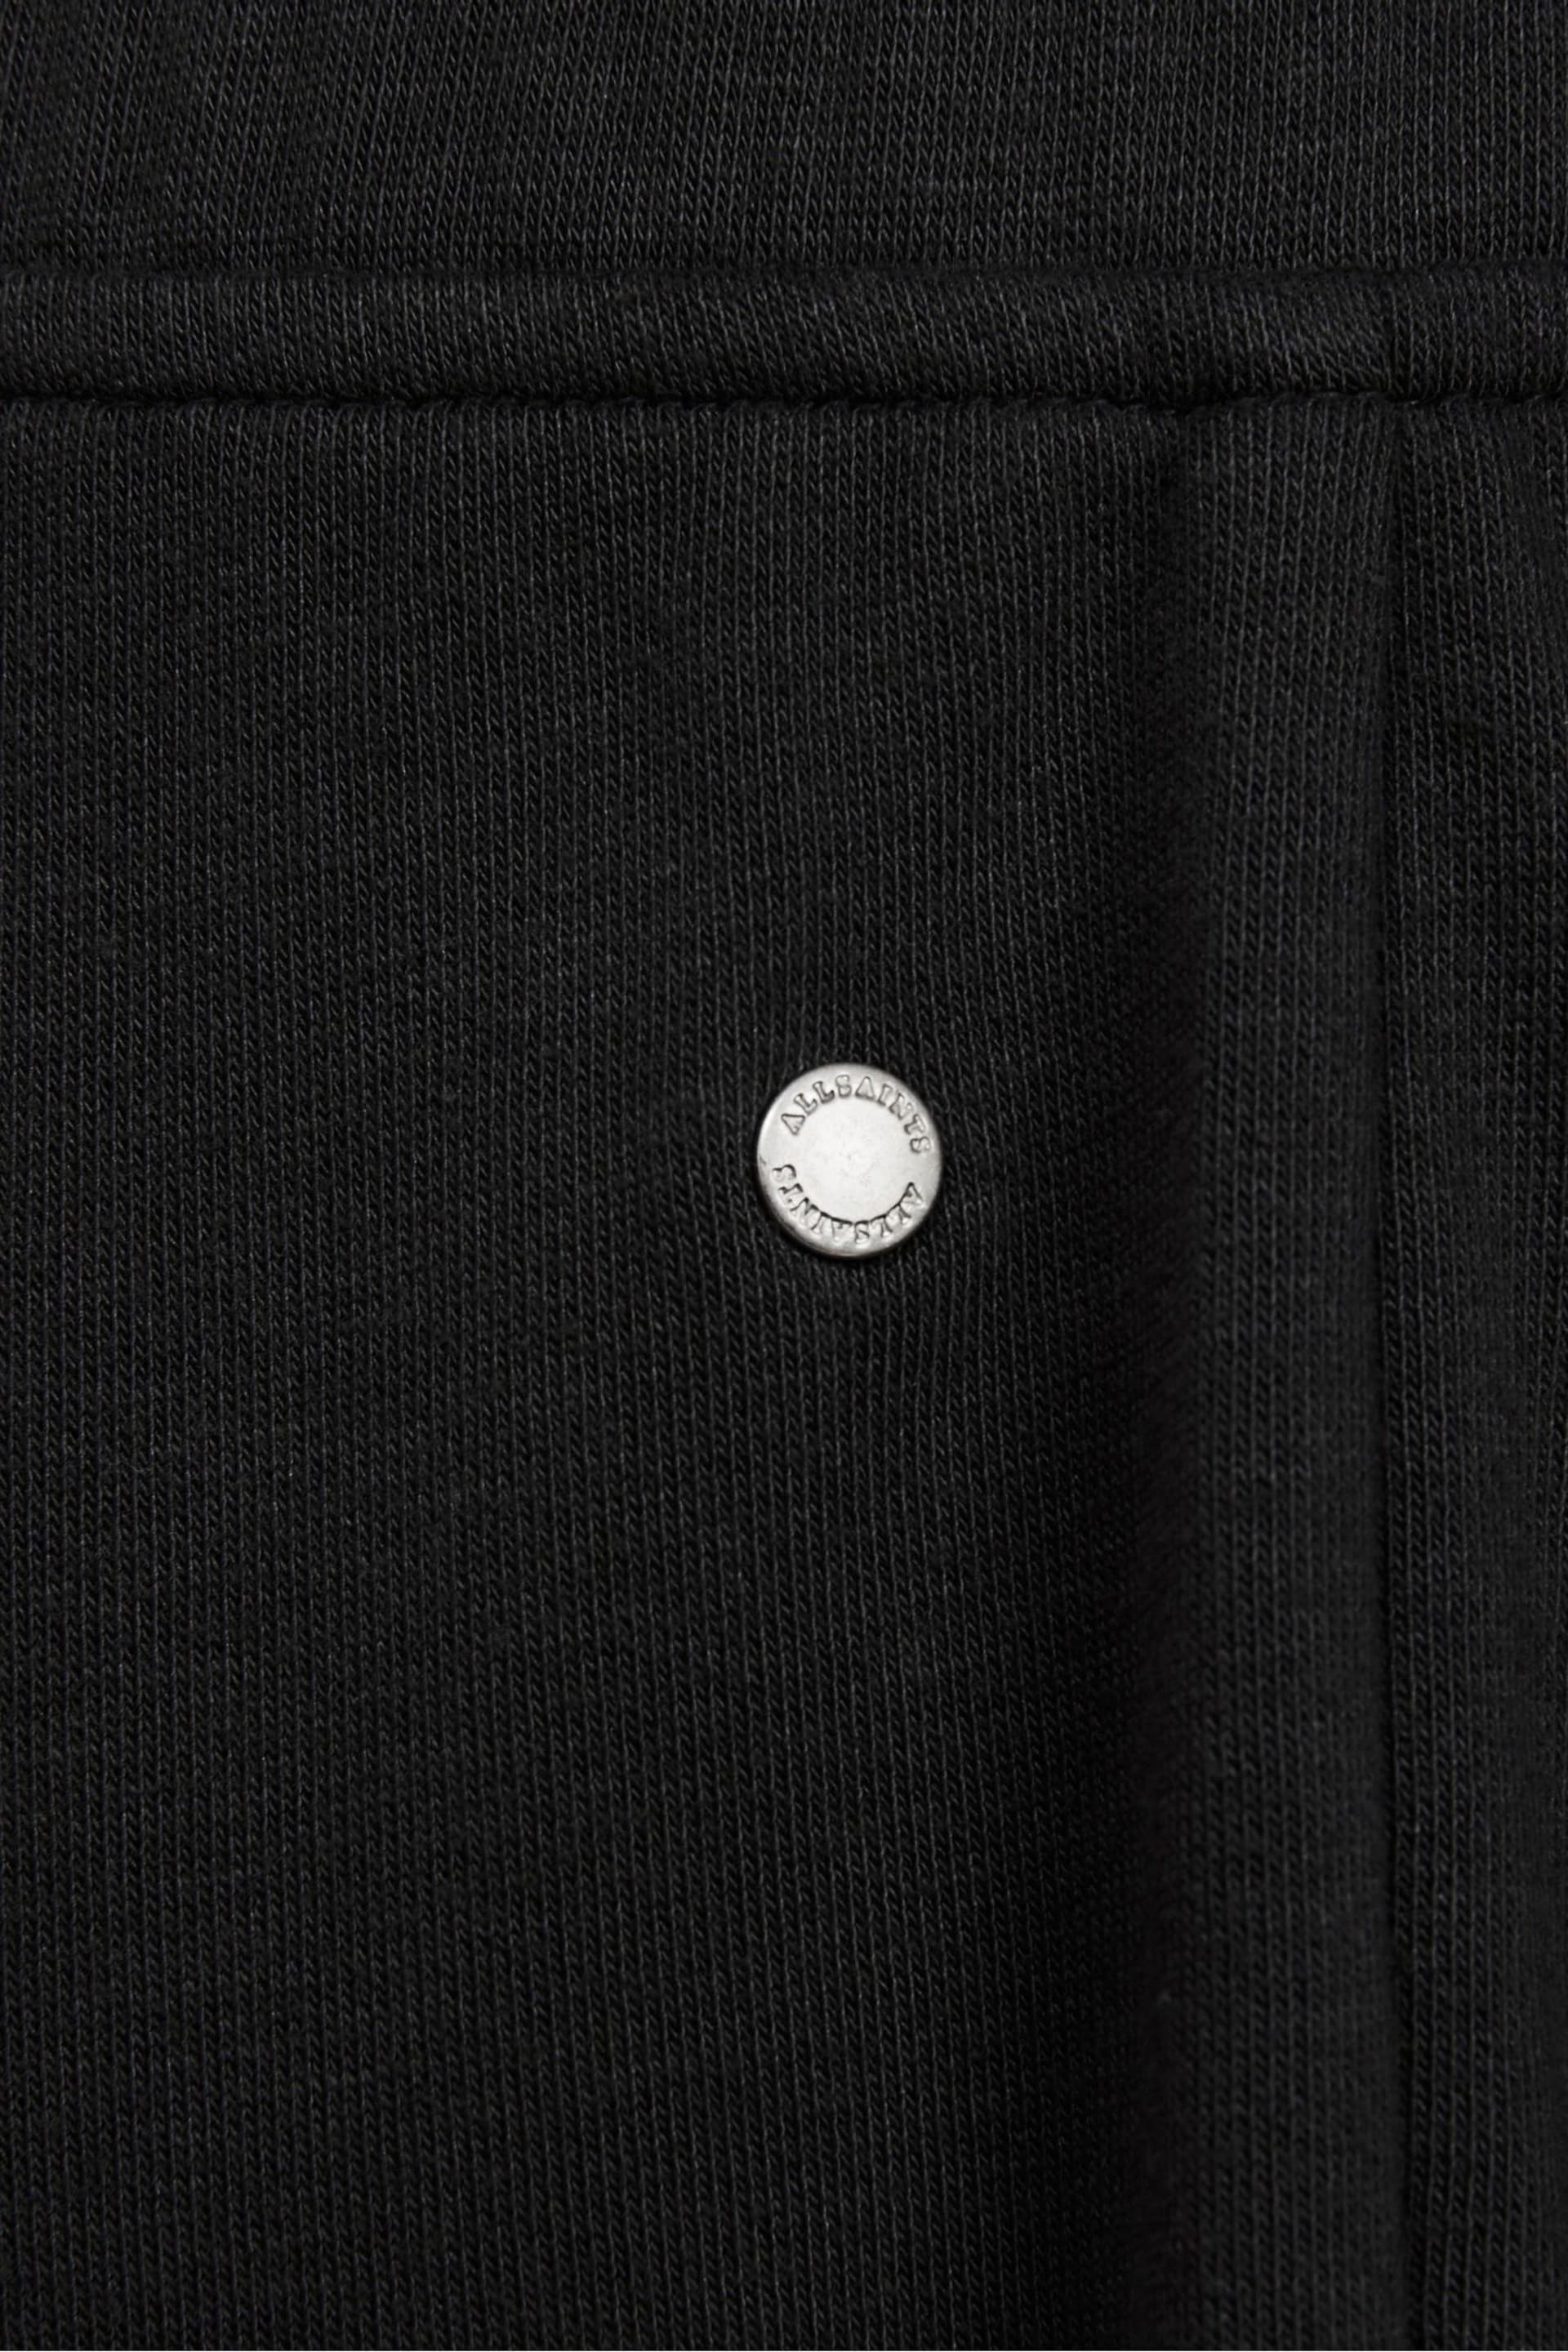 AllSaints Black Helix Shorts - Image 7 of 7